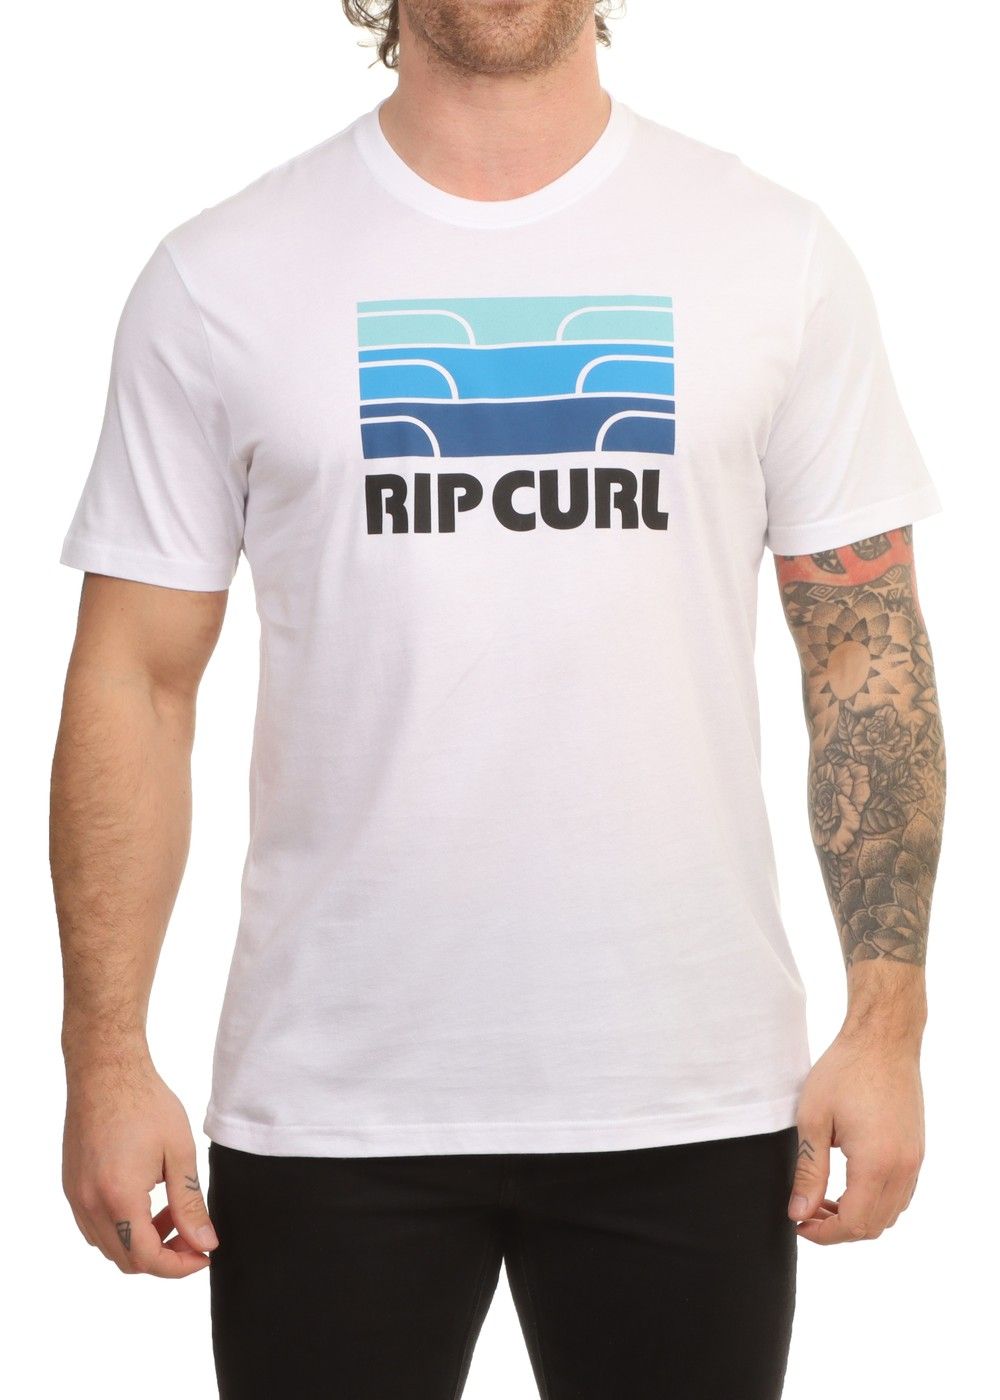 Ripcurl Surf Revival Waving Tee Optical White